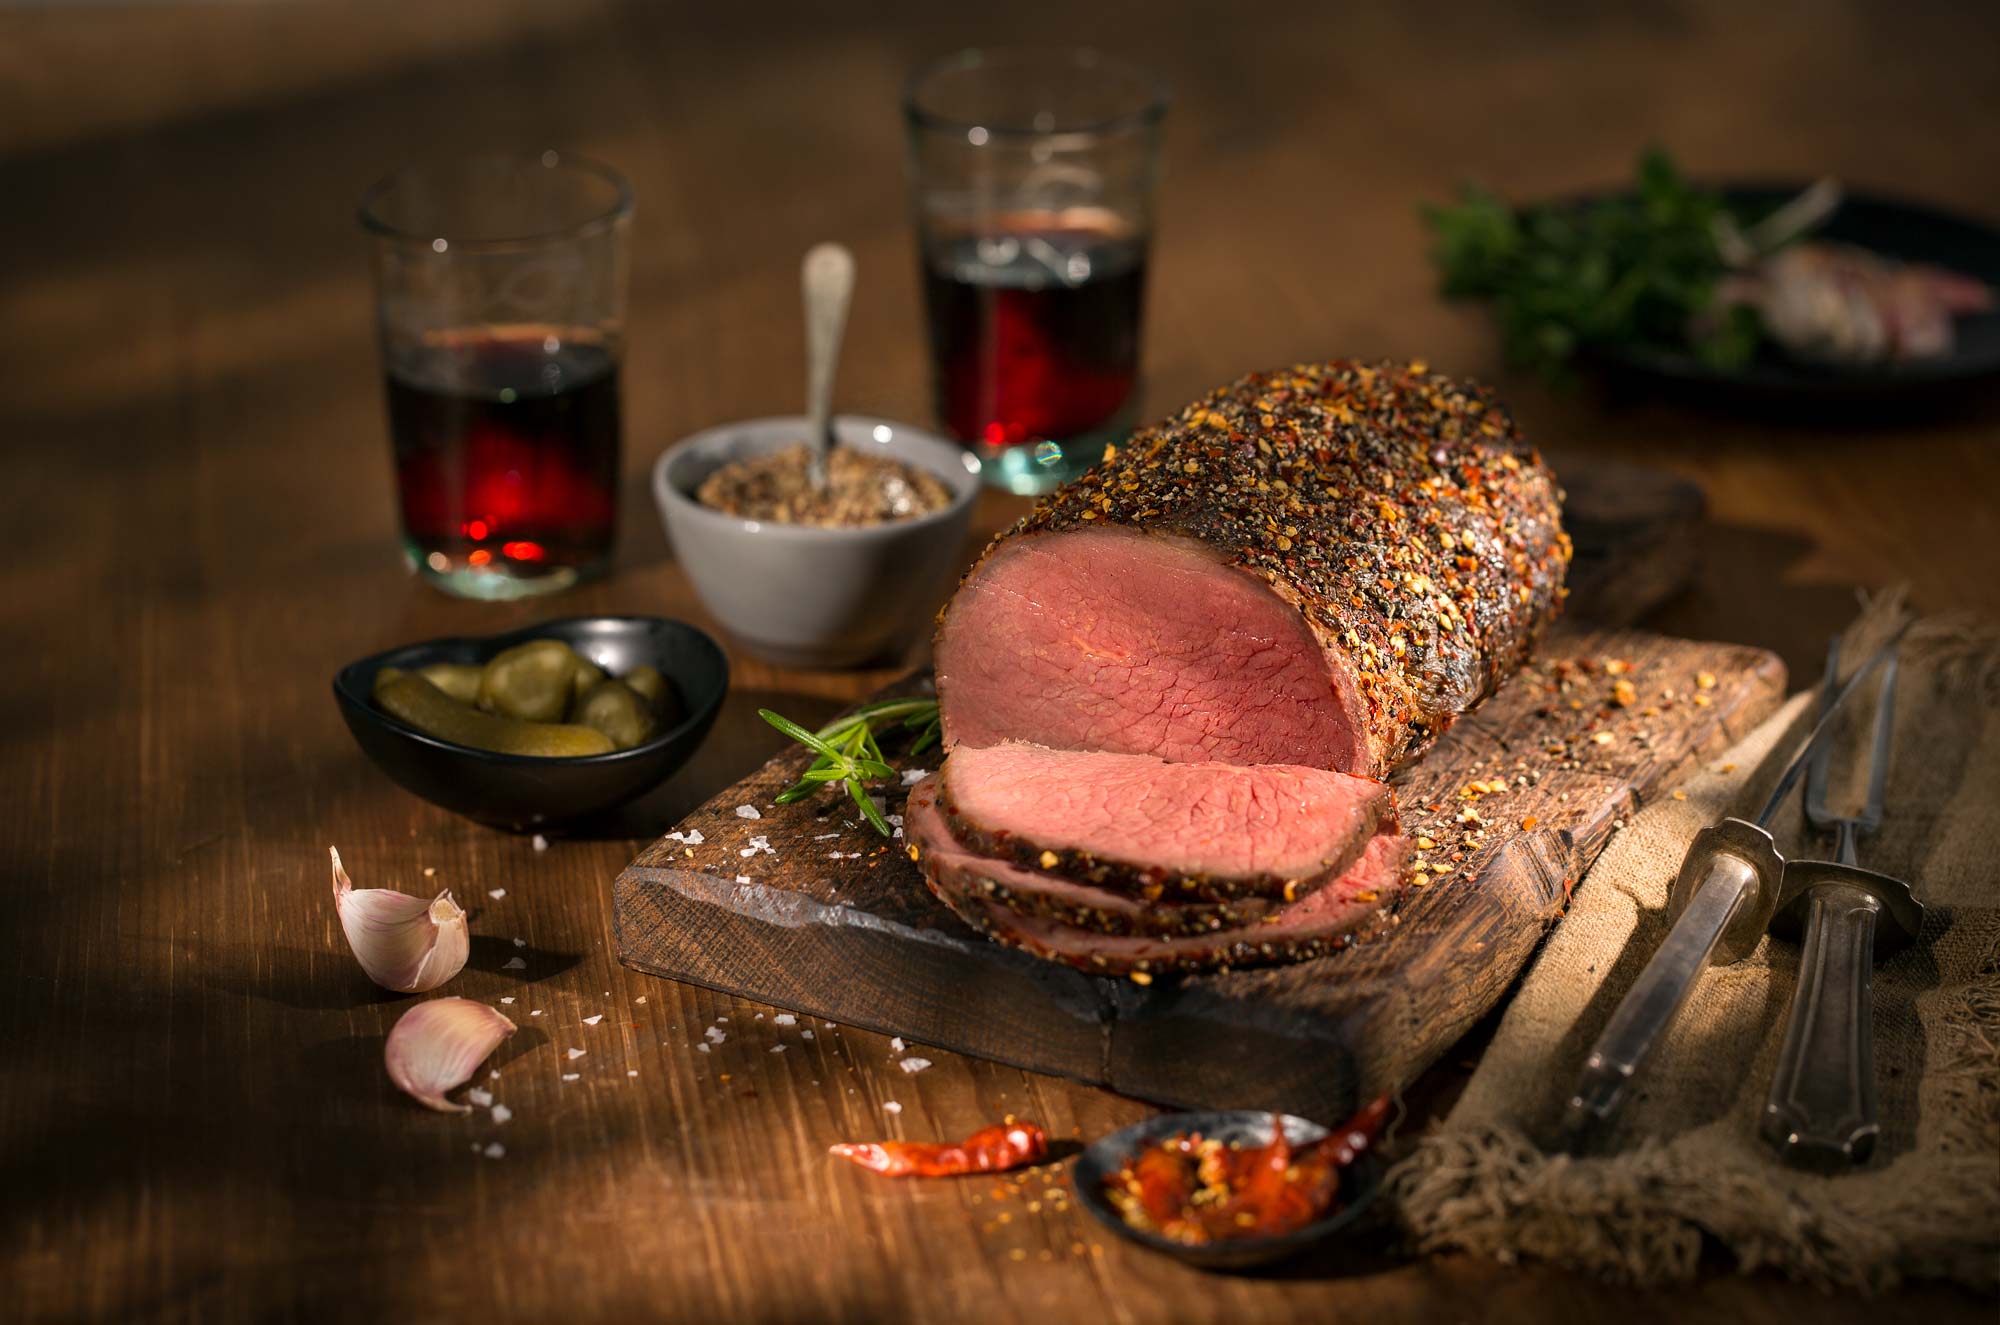 Rustic photo of roast beef